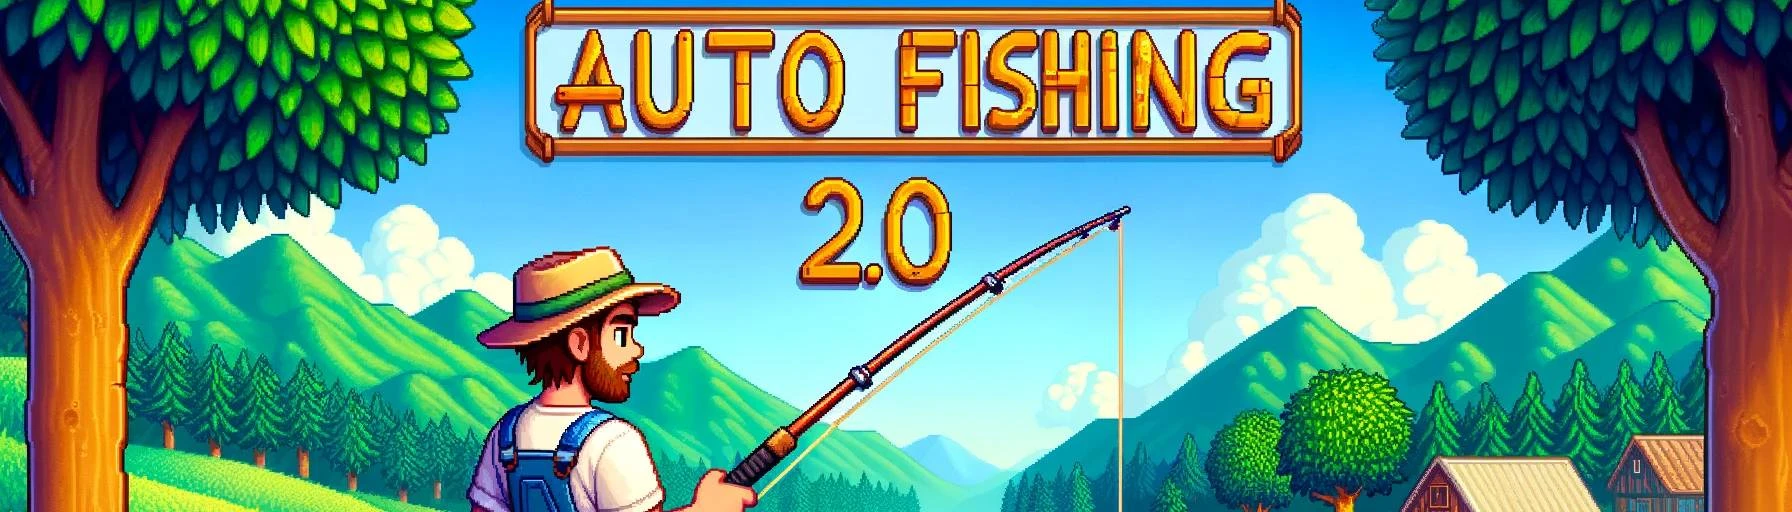 Auto Fishing 2.0 at Stardew Valley Nexus - Mods and community